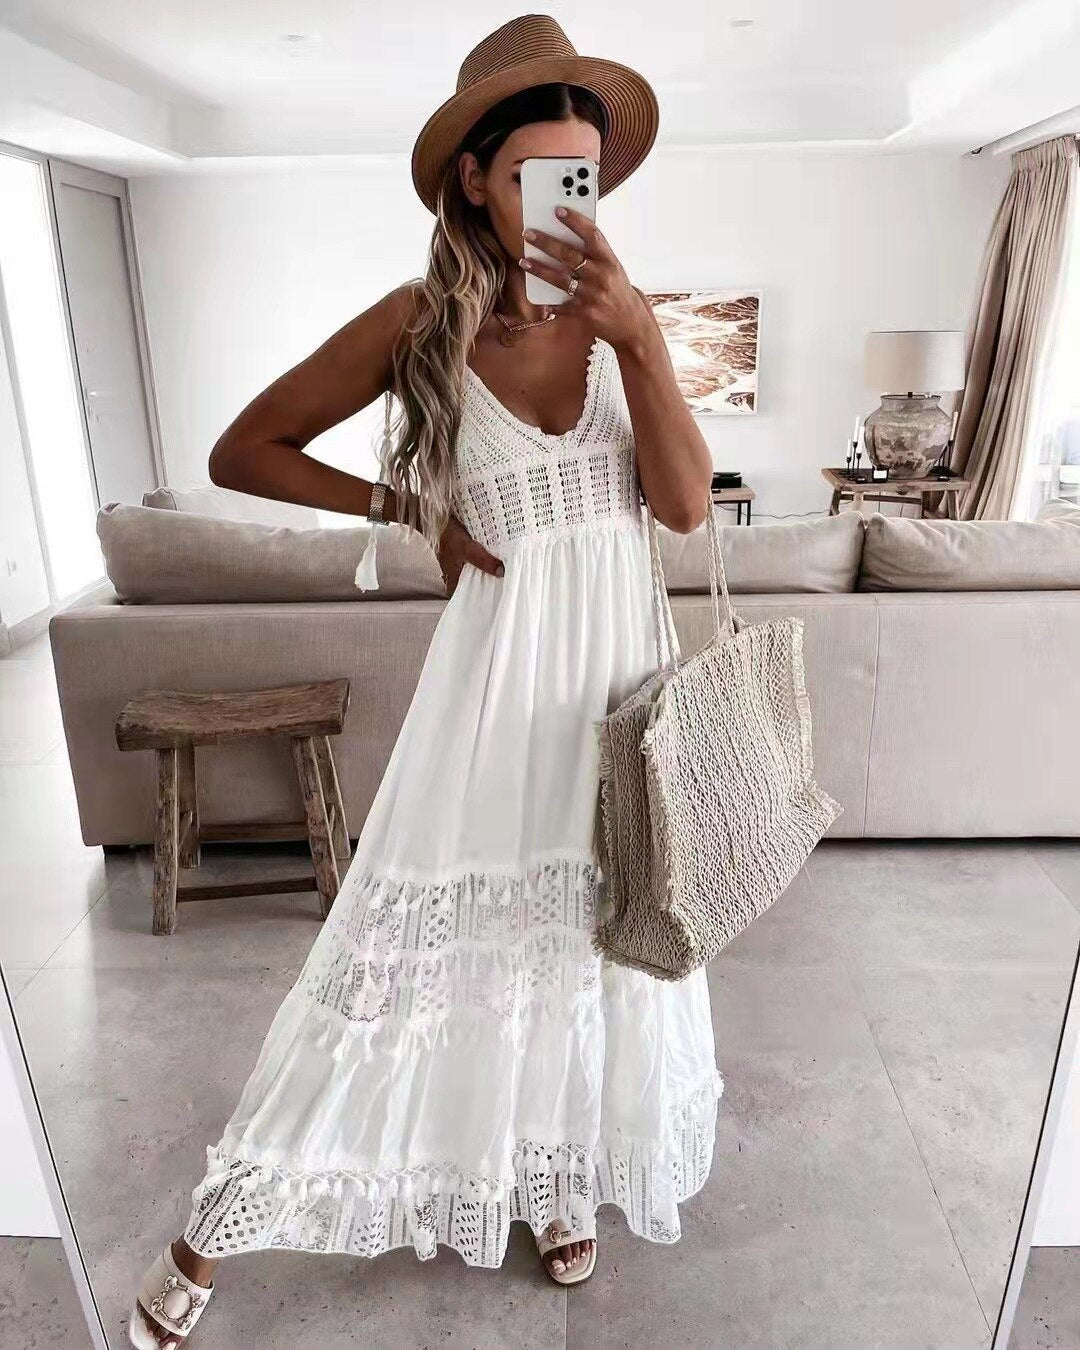 Boho Dress for Women|Bohemian Dress|Midi Boho Dress| Vintage Solid V-neck Backless Hollow Out Maxi DressBodycon Lace White Boho Dresses|Wedding Guest Dress